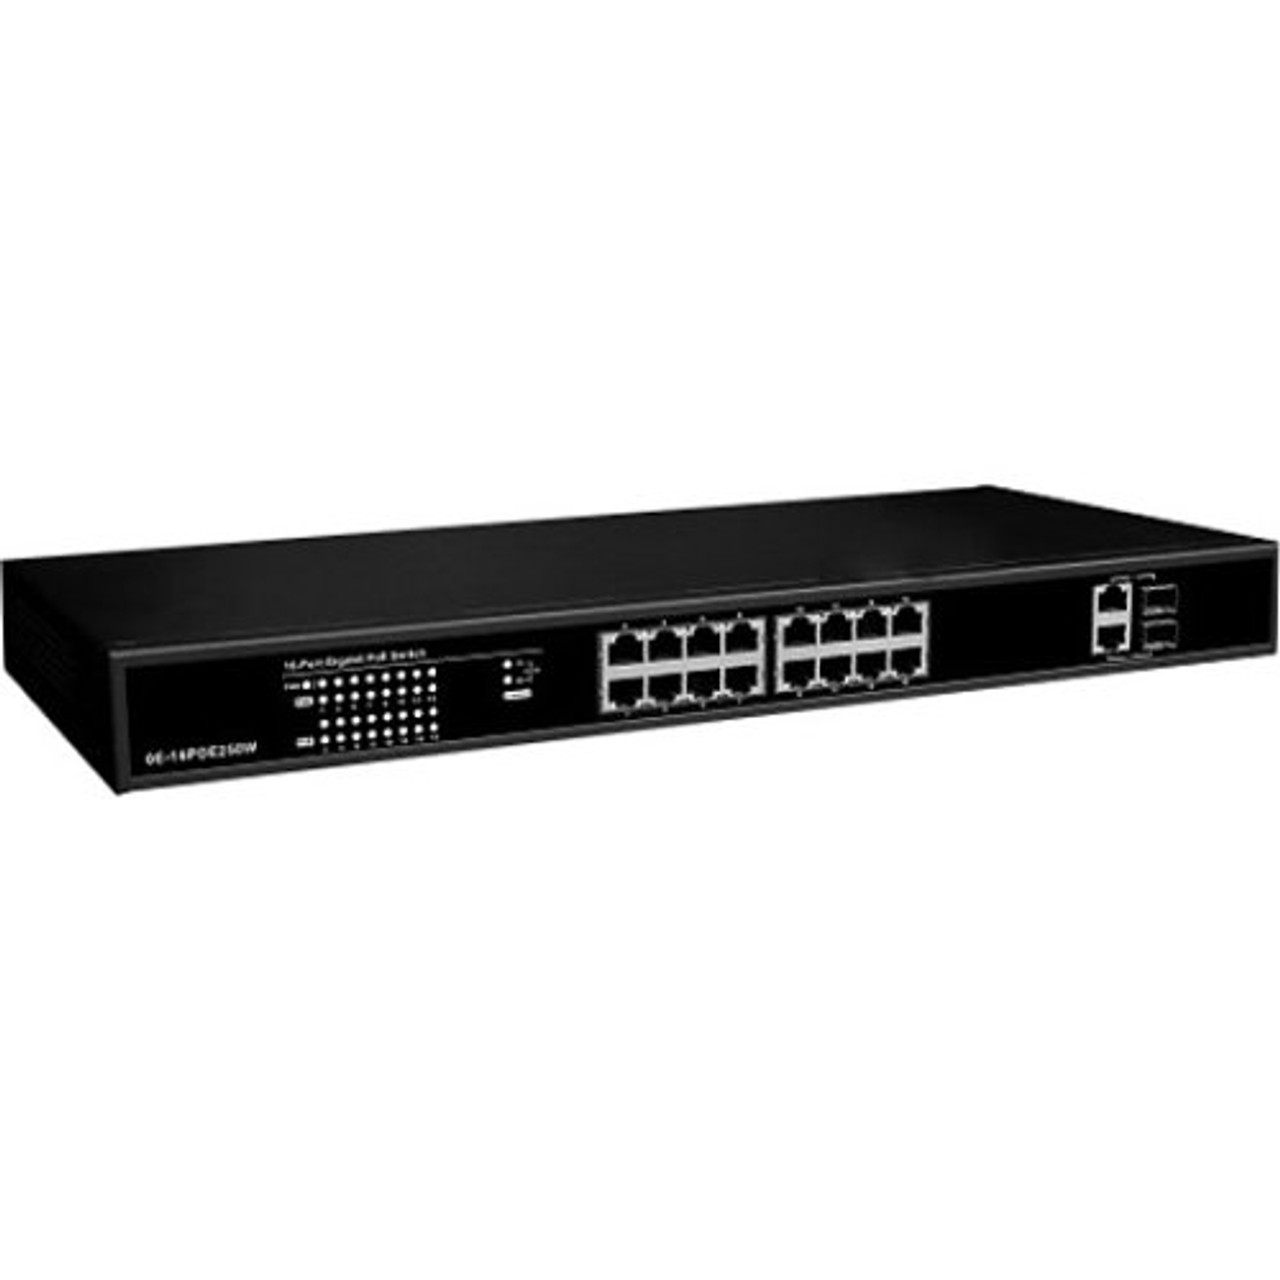 Mini 2 Port RJ45 RJ-45 Network Switch Ethernet Network Box